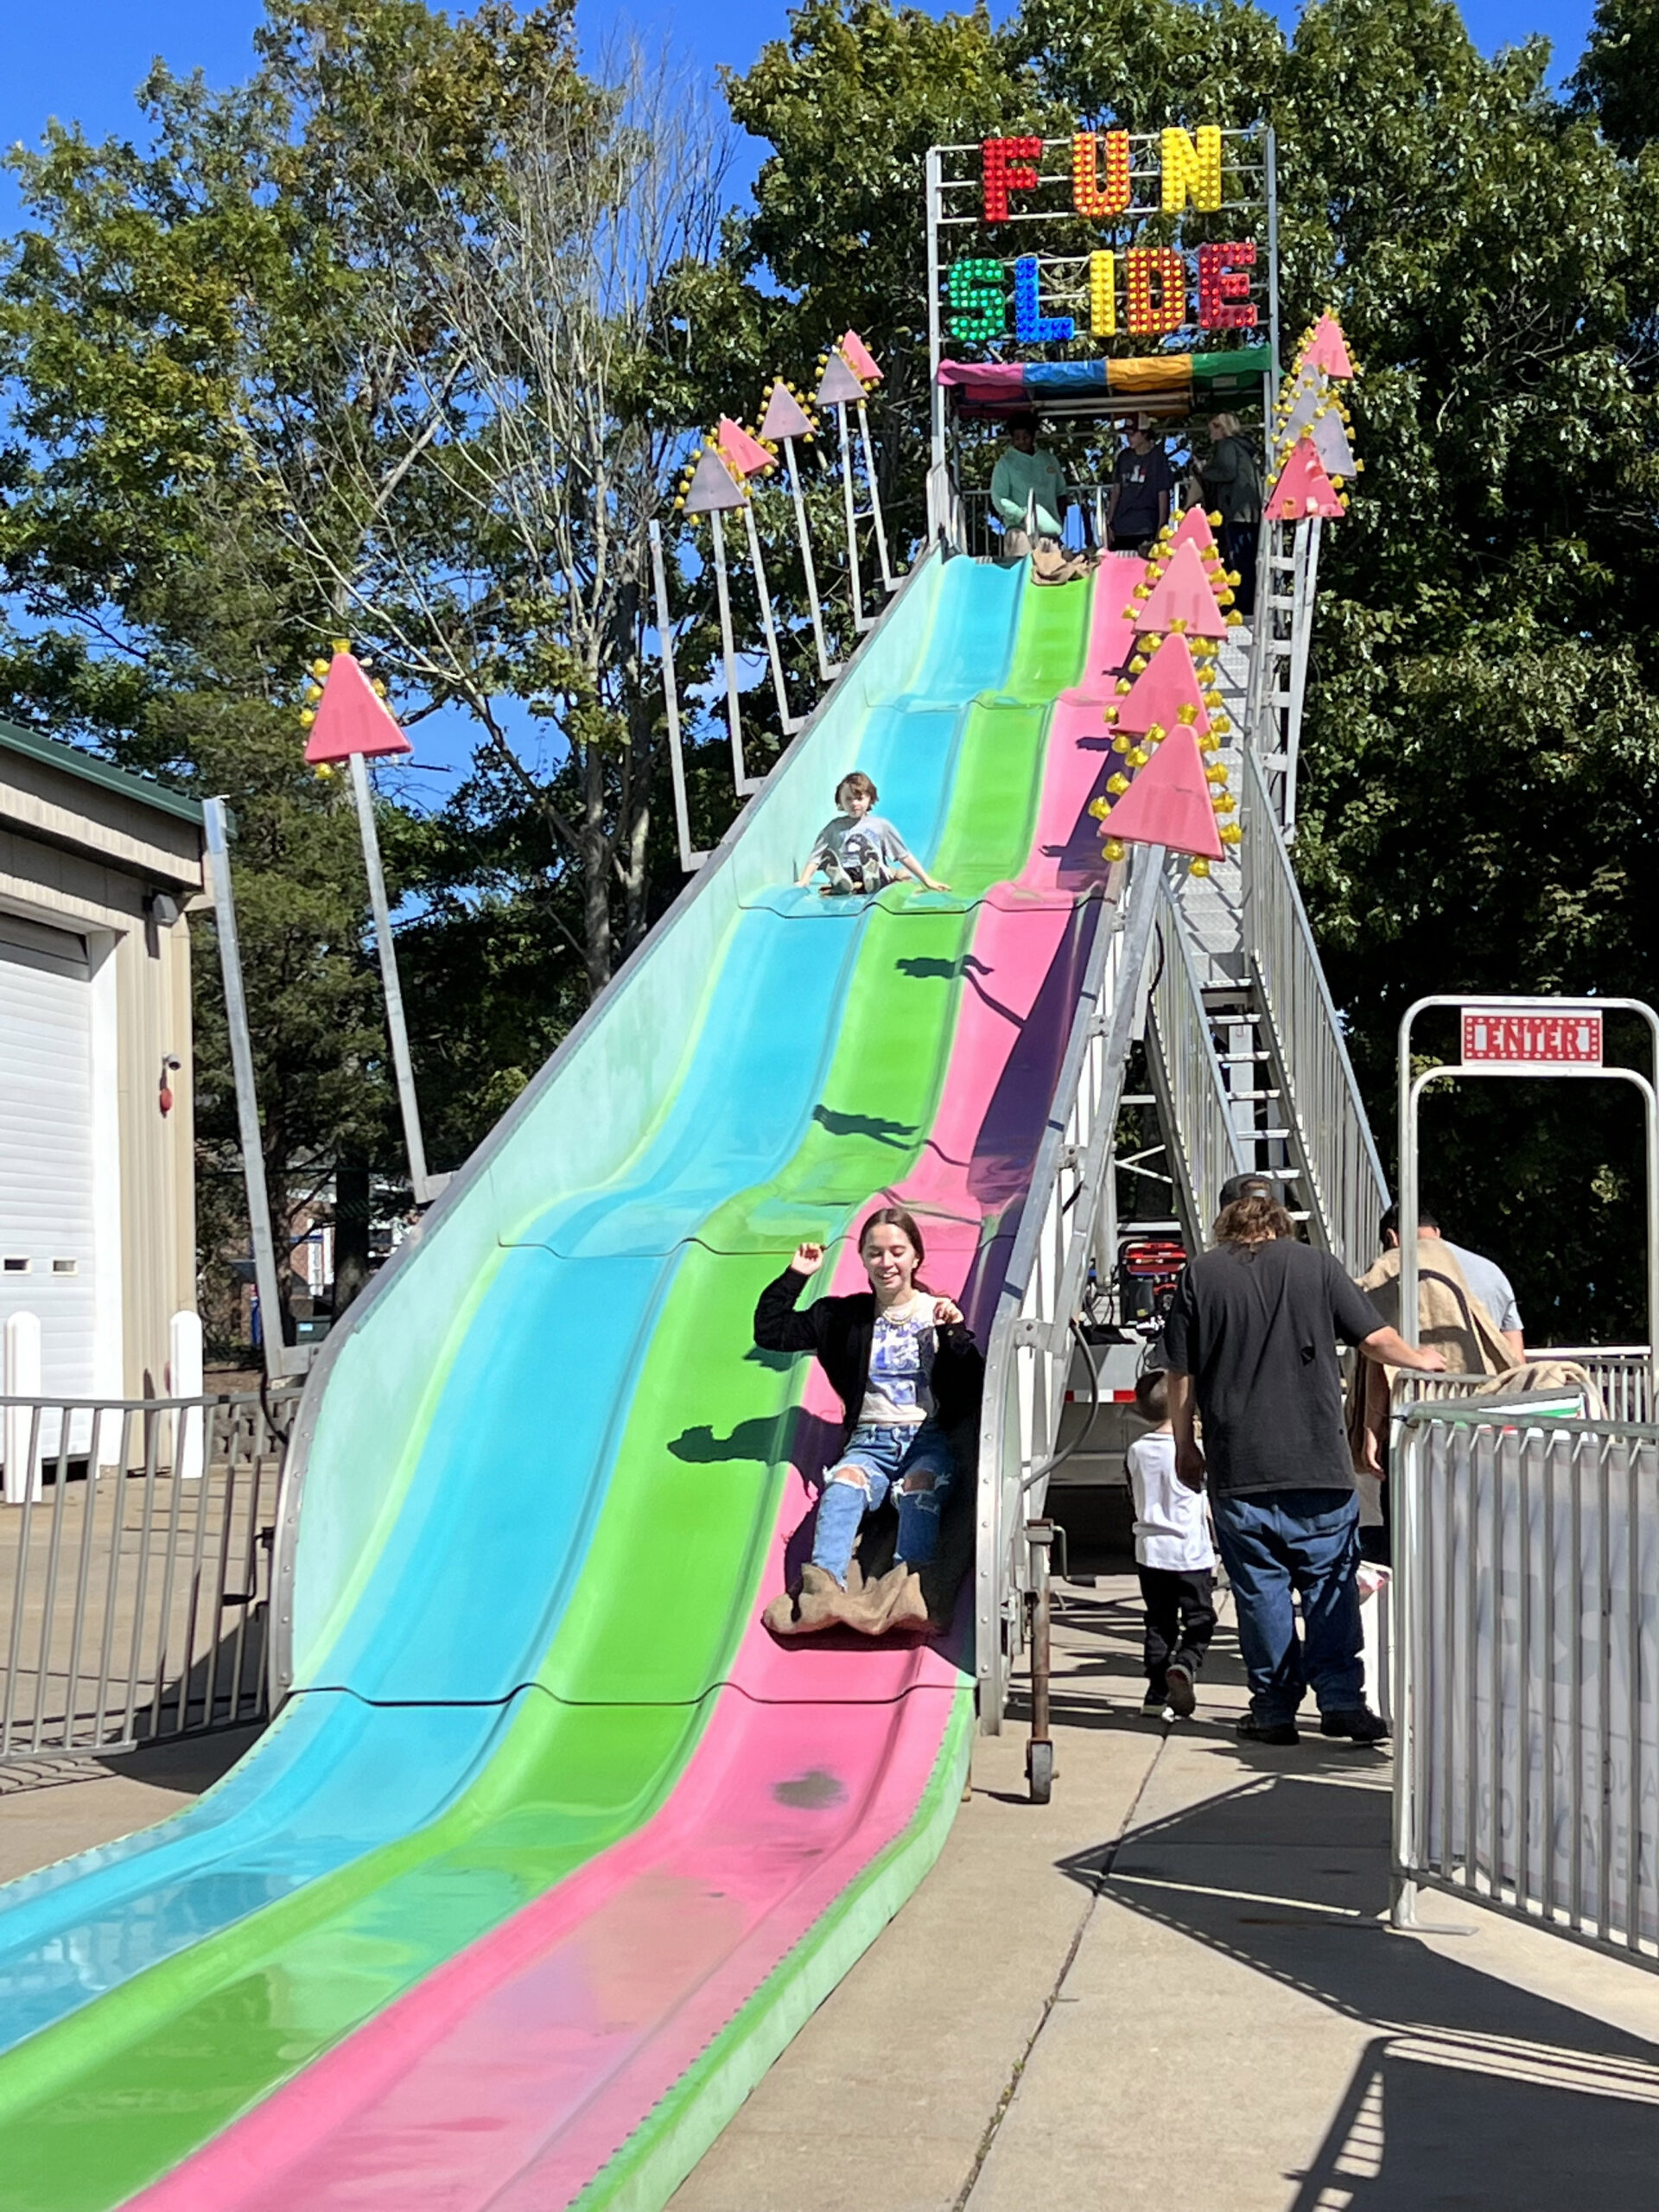 Kids enjoy the Fun Slide.